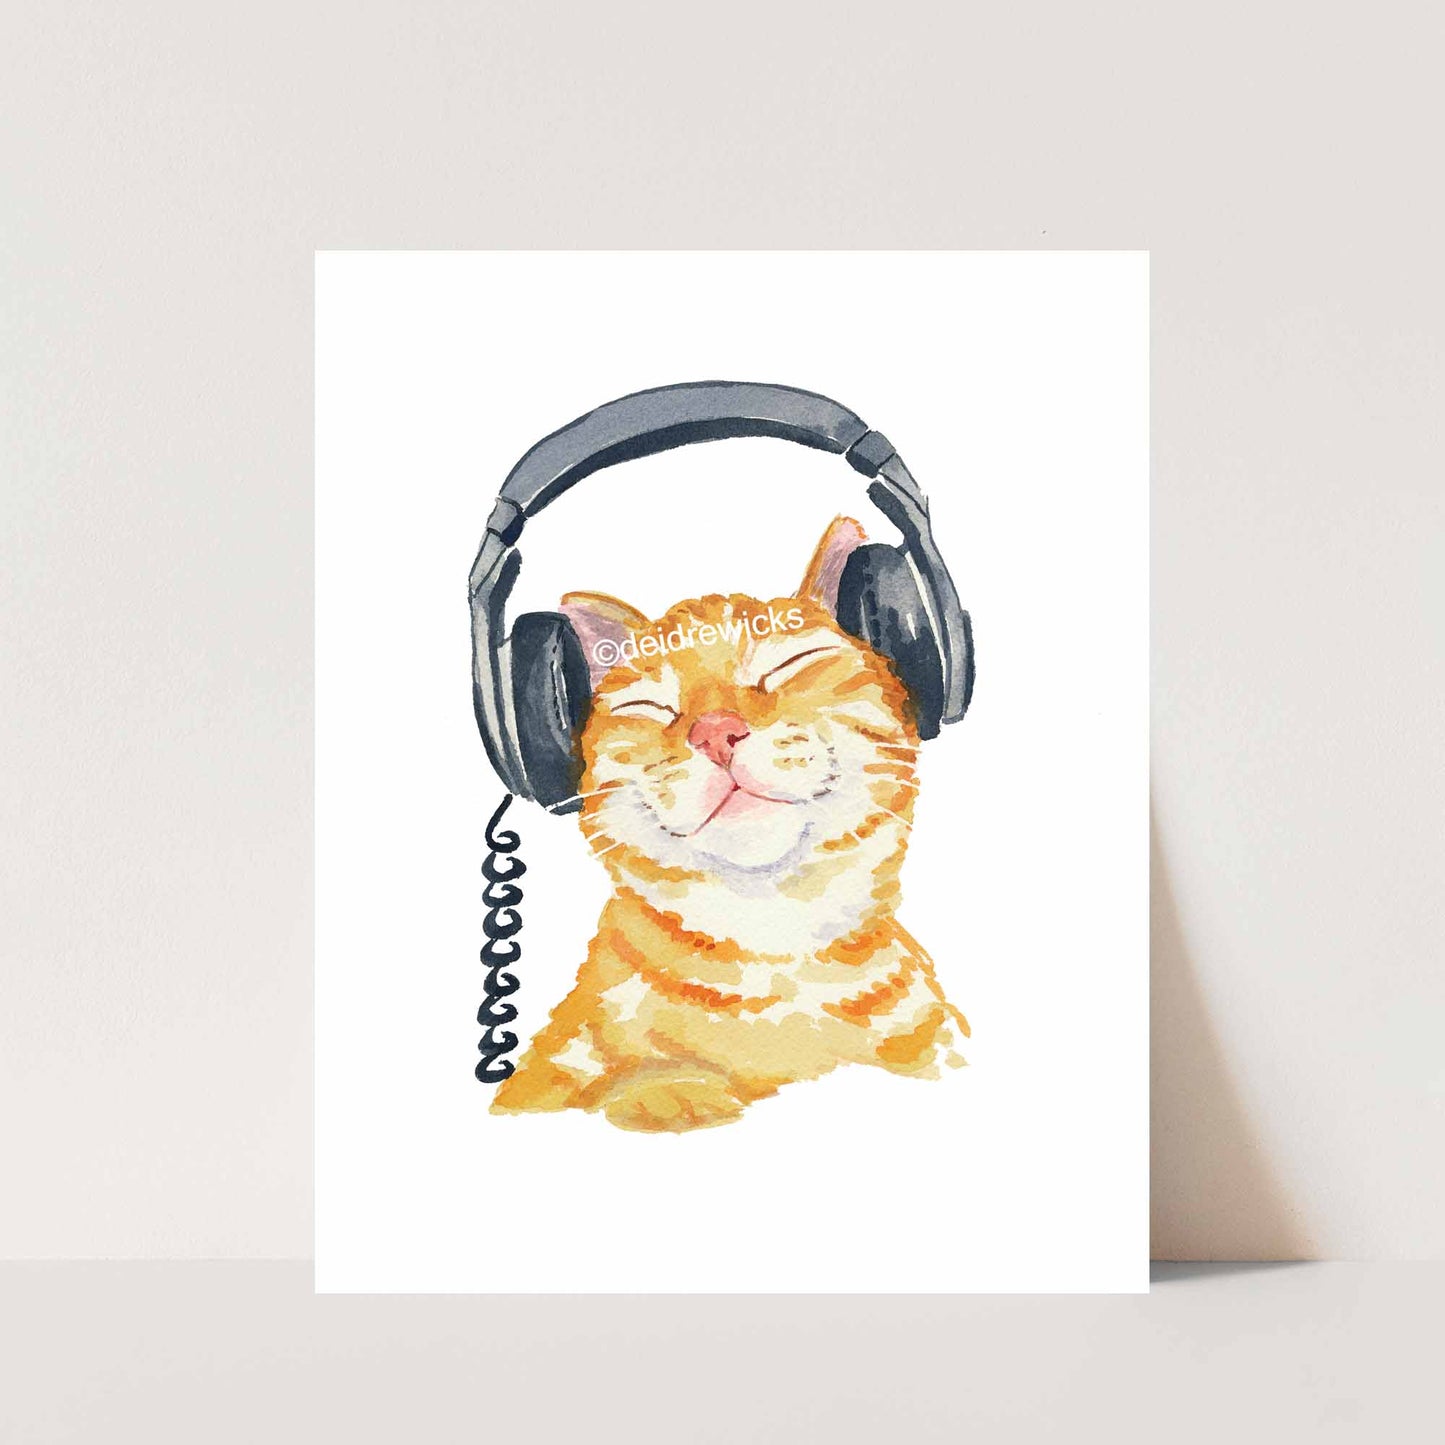 Cat Watercolour print of a ginger tabby cat wearing music headphones. Original art by Deidre Wicks